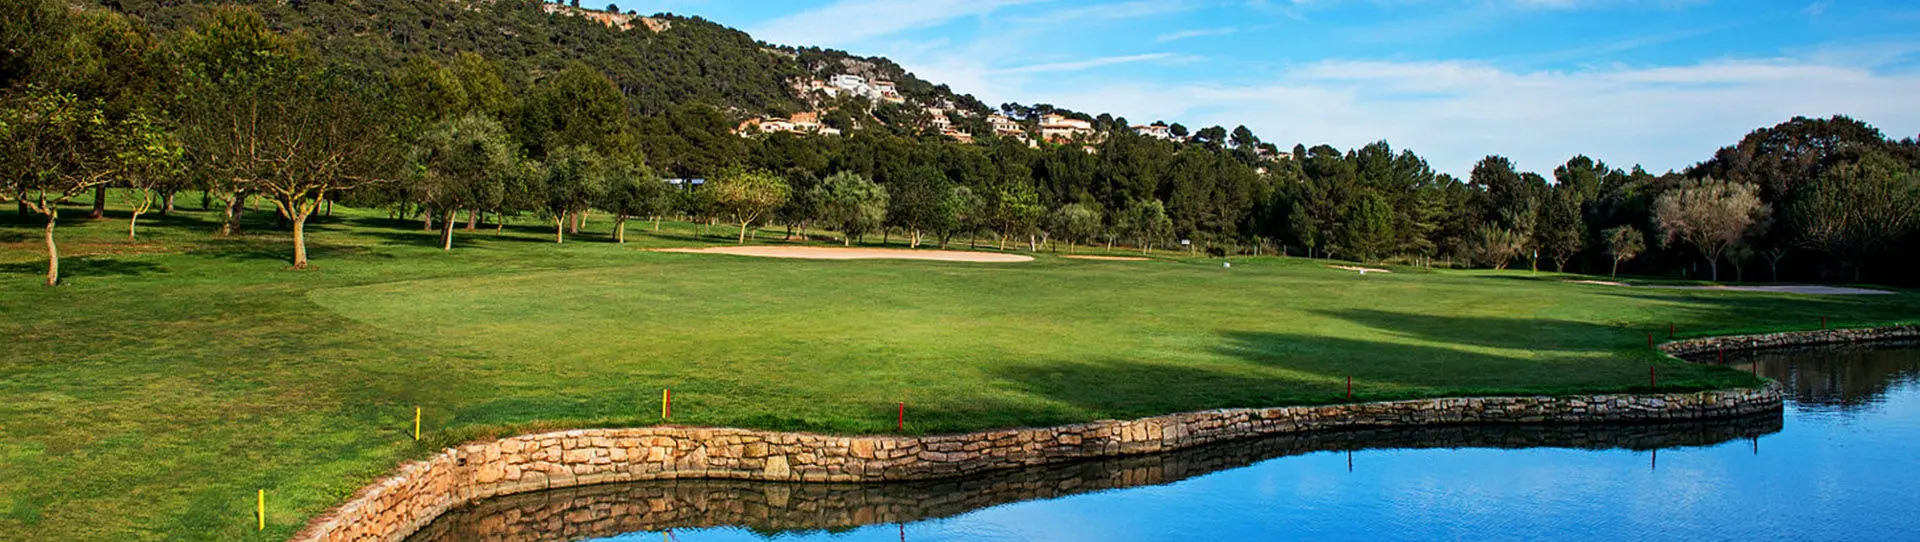 Spain golf courses - Canyamel Golf Course - Photo 1